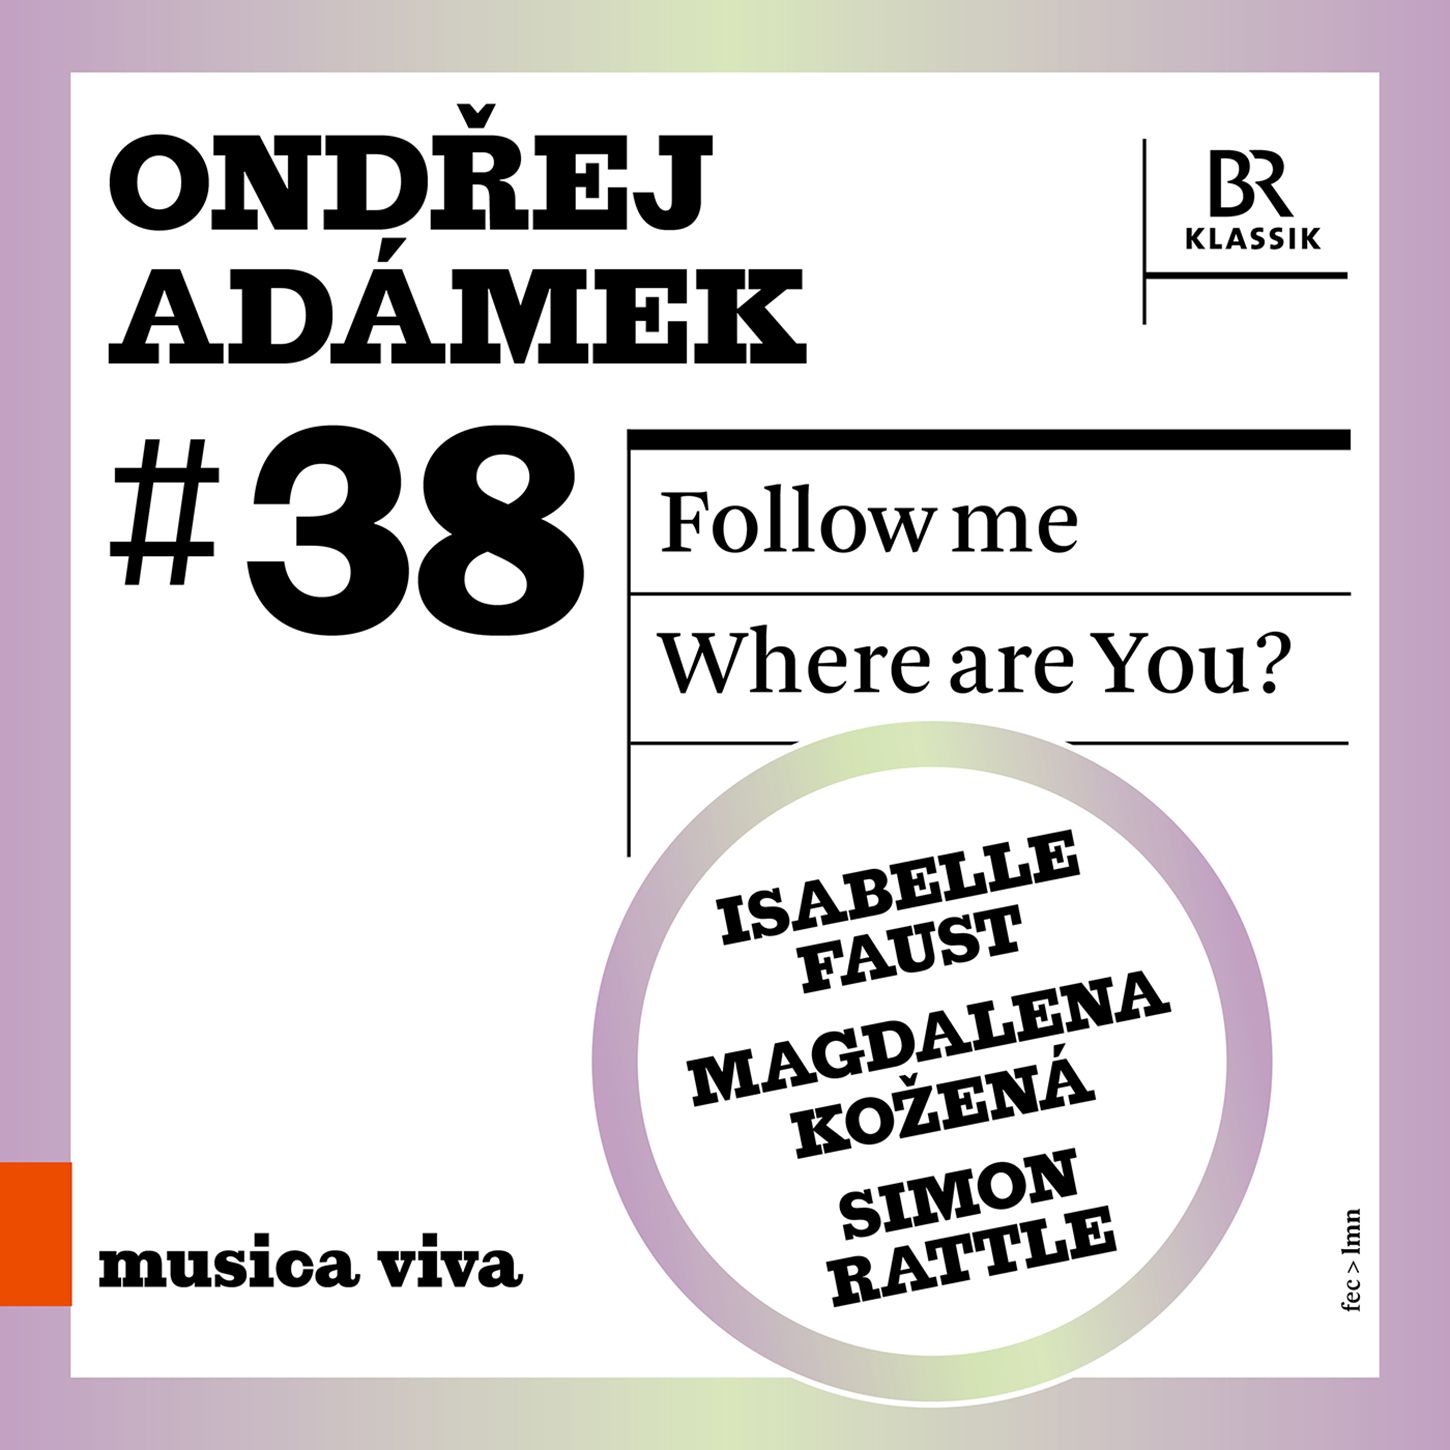 The Music of Ondřej Adámek